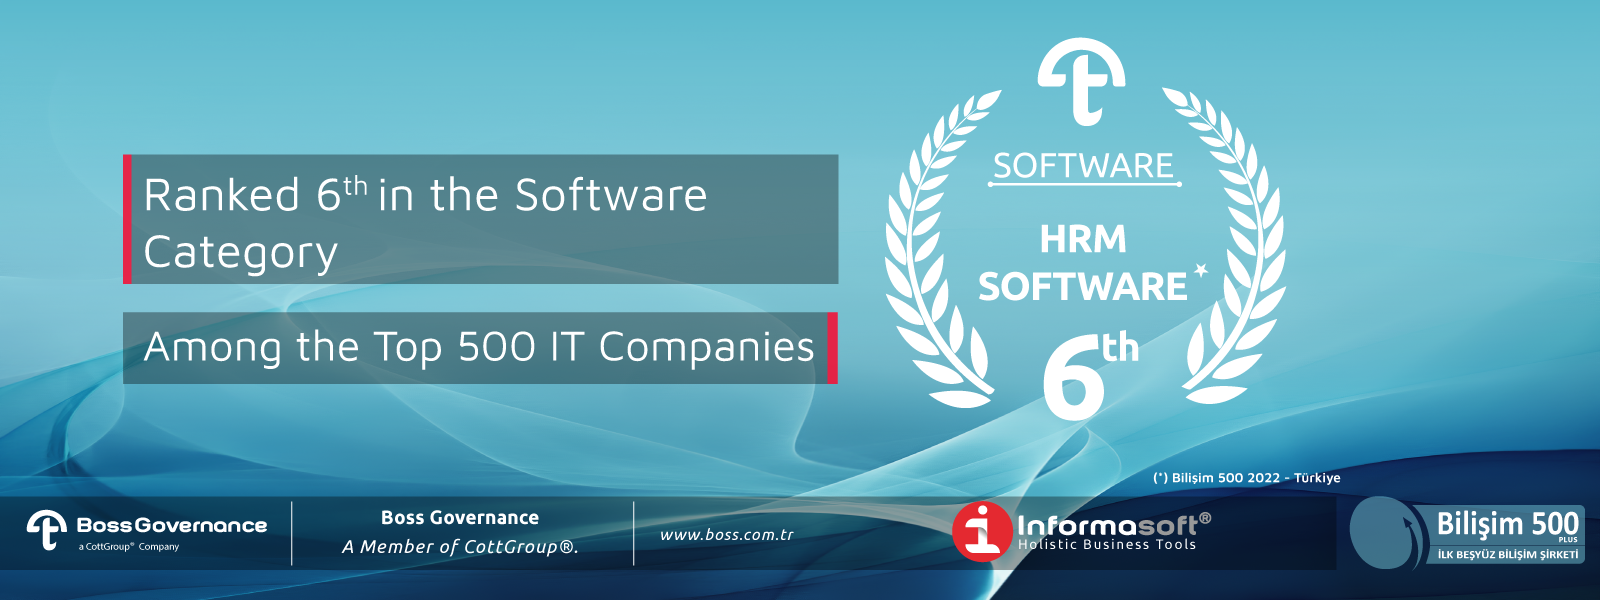 Informasoft - Online Human Resources Software